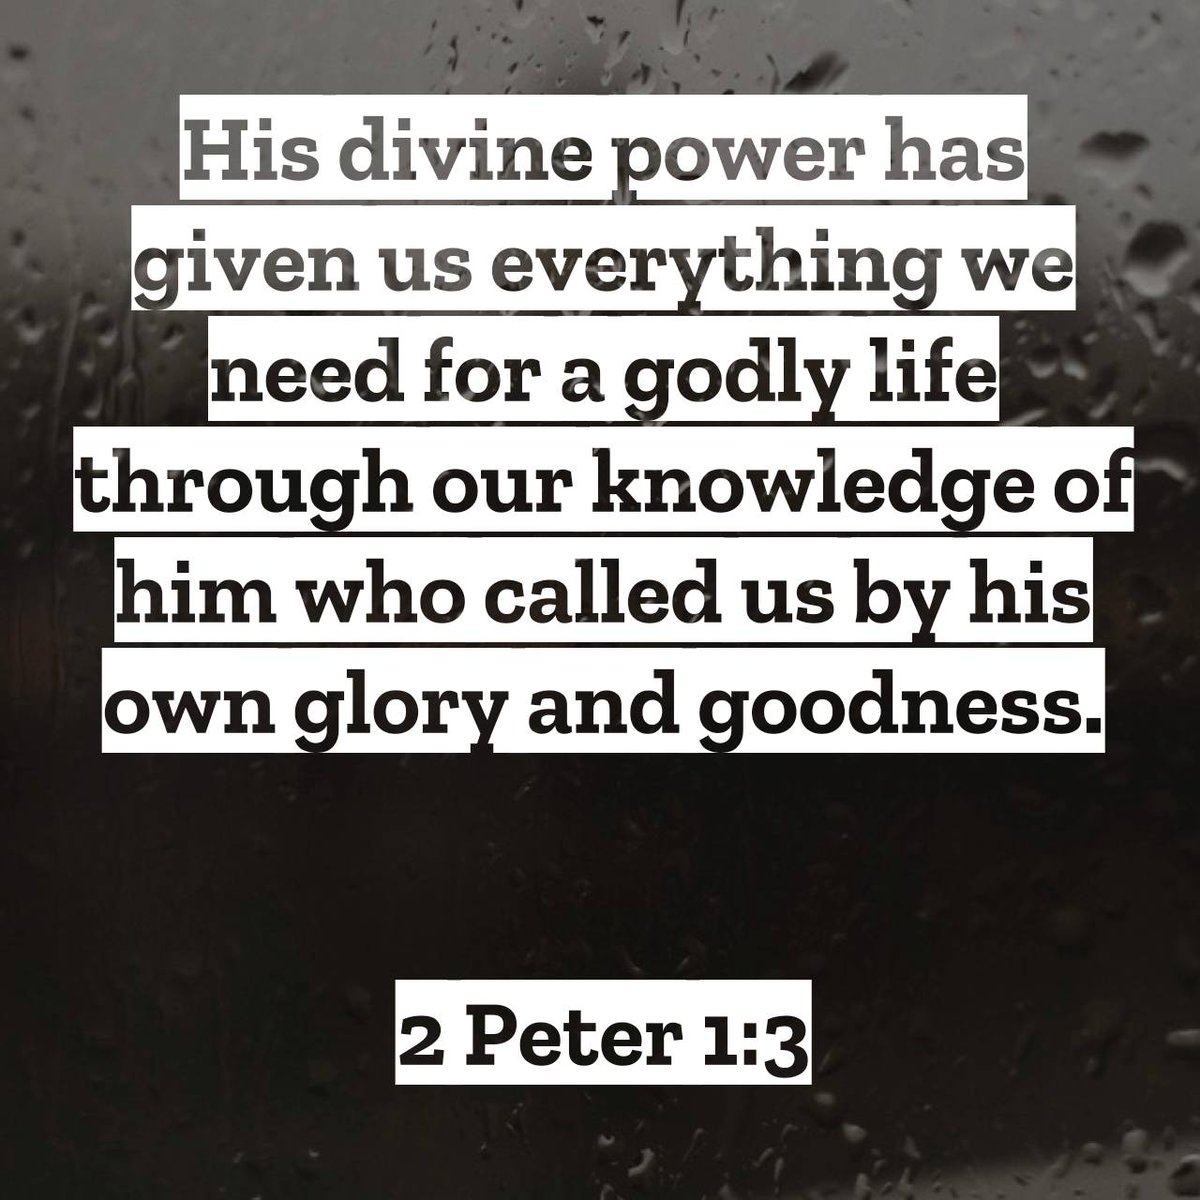 2 Peter 1:3

#verseoftheday
#dailyverse